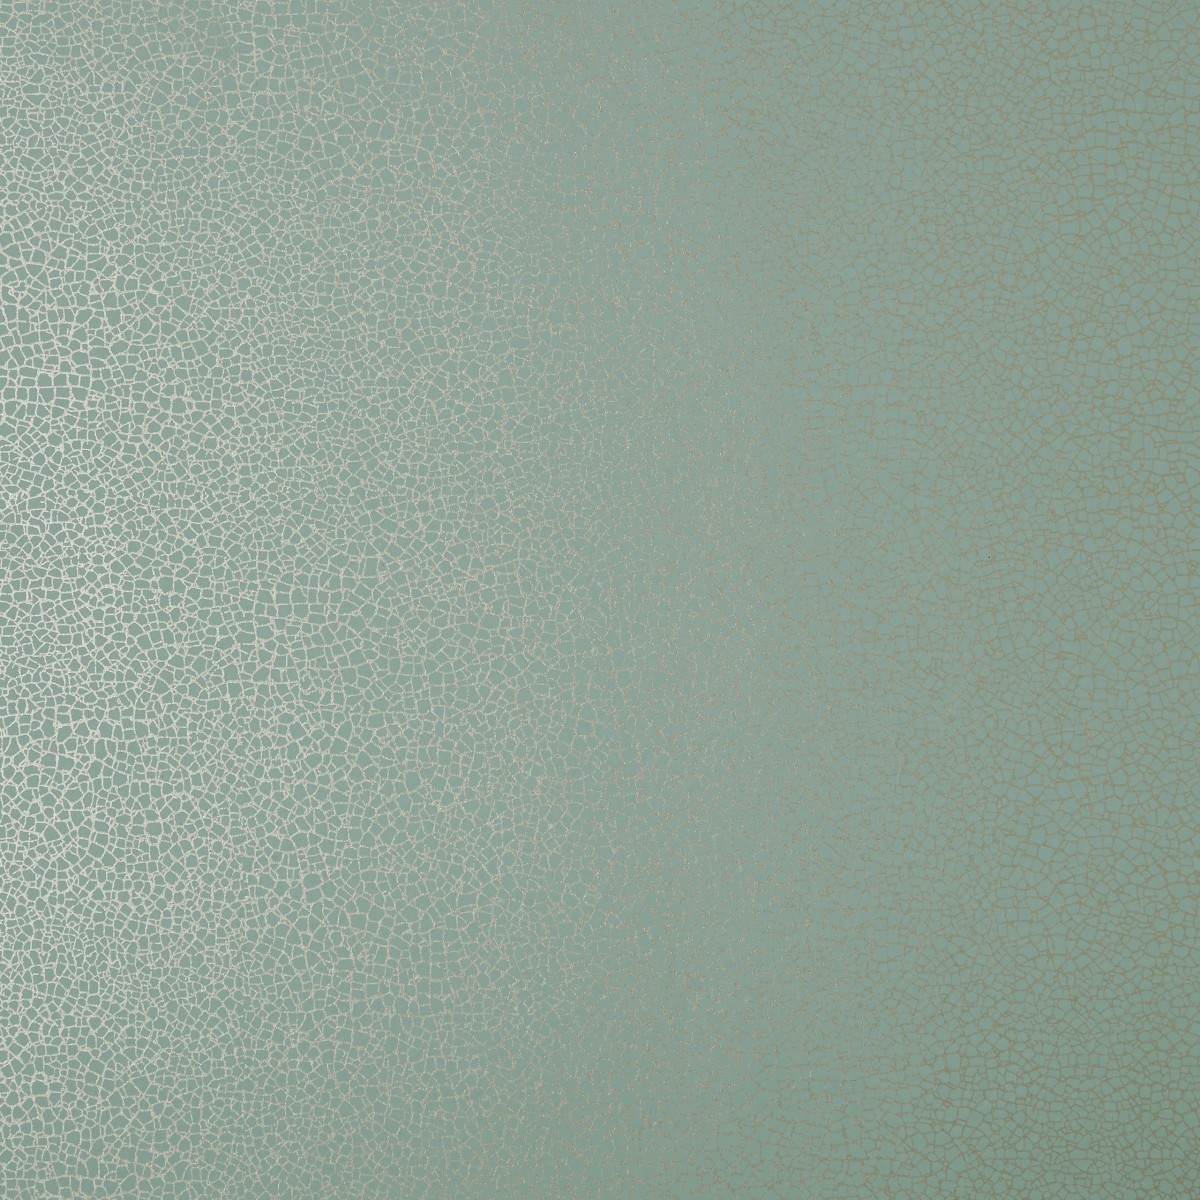 Tapet Emile, Neo Mint Green Luxury Crackle, 1838 Wallcoverings, 5.3mp / rola, Tapet living 